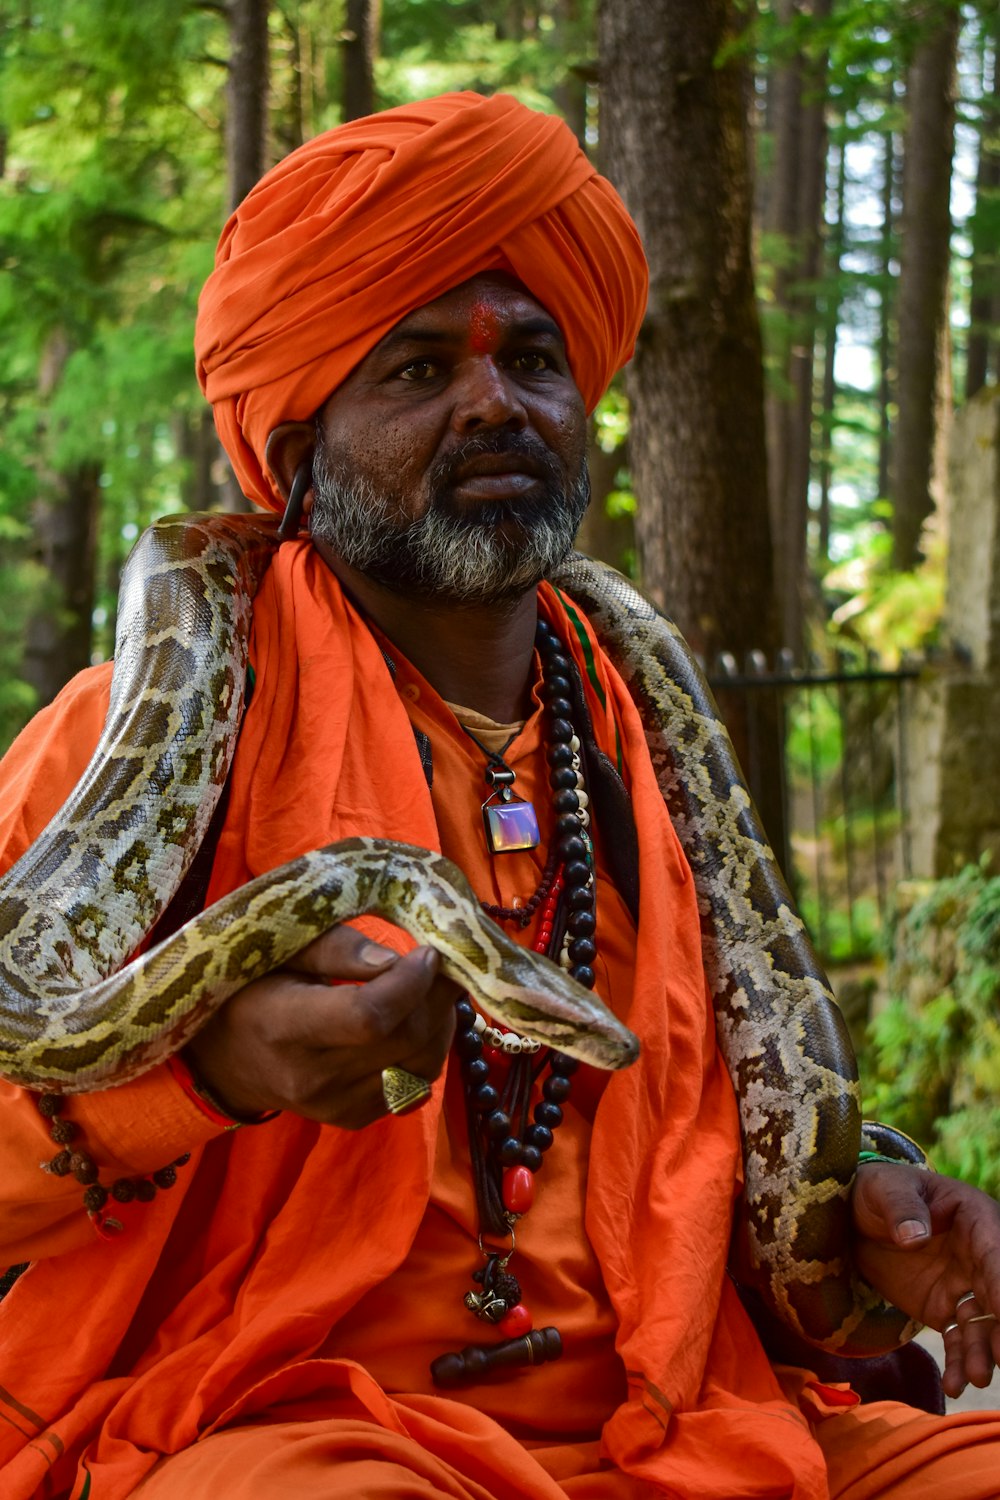 a man in an orange turban holding a snake